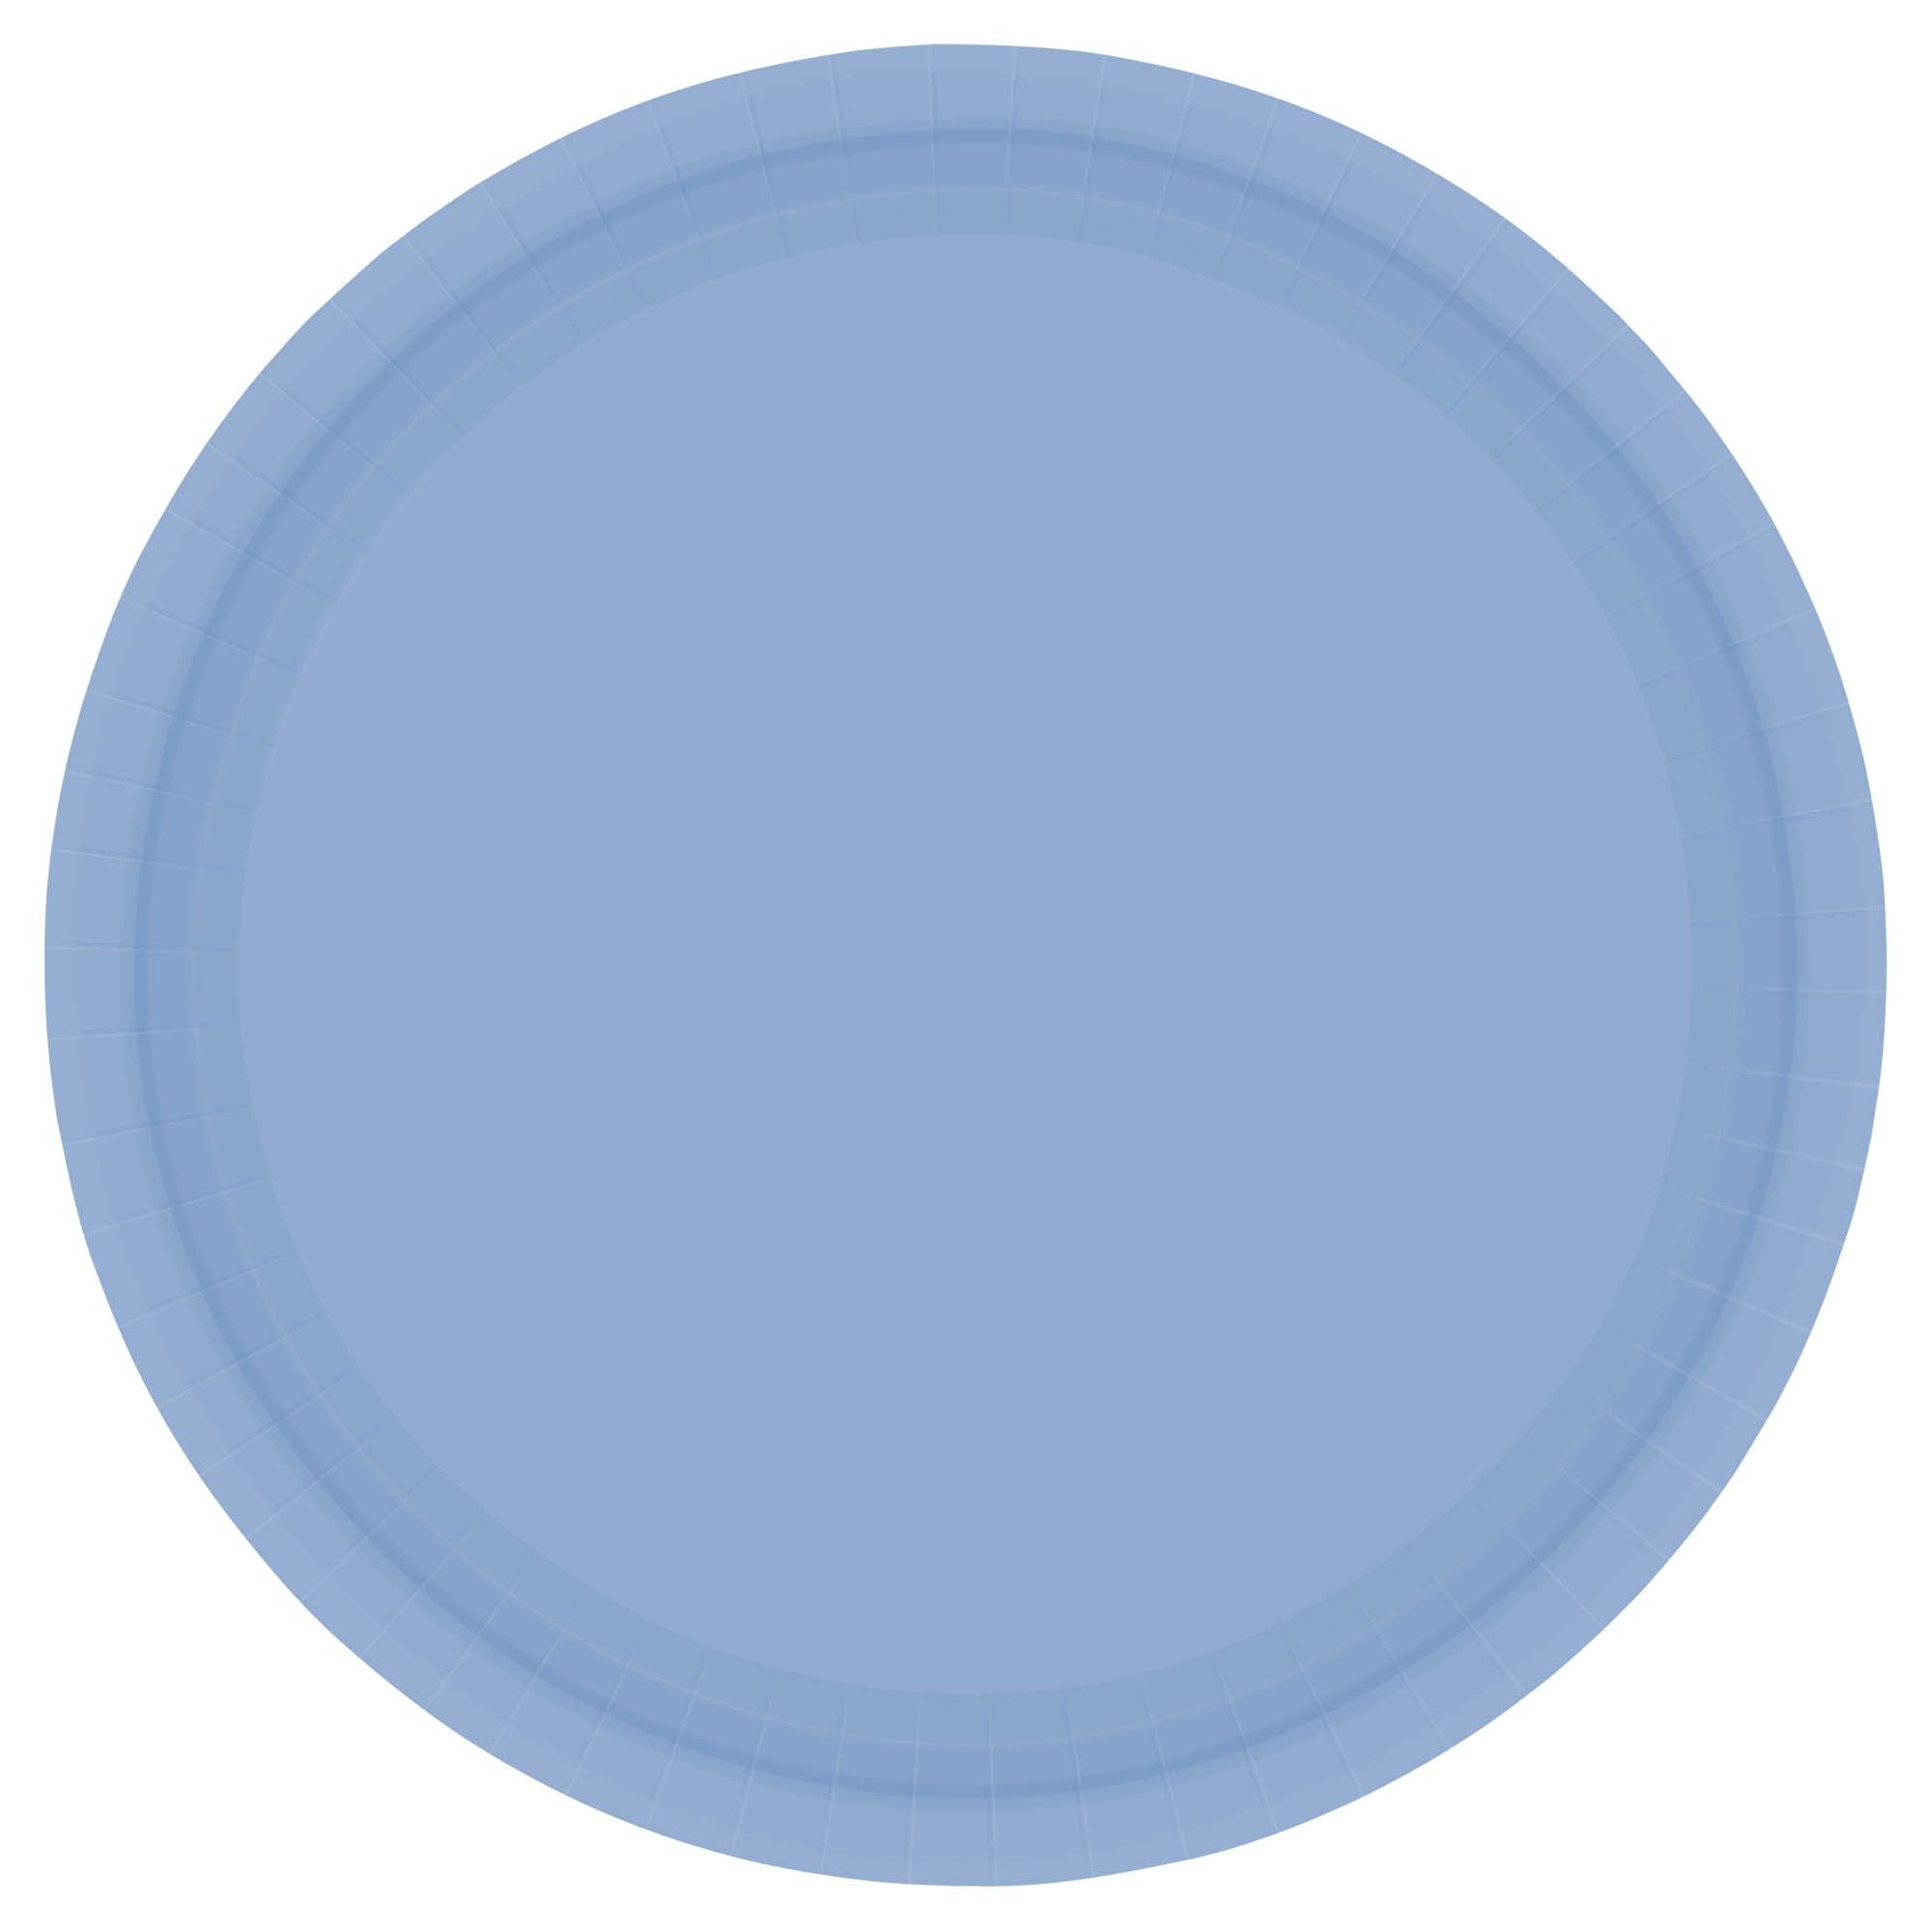 6 3/4" Round Paper Plates - Pastel Blue